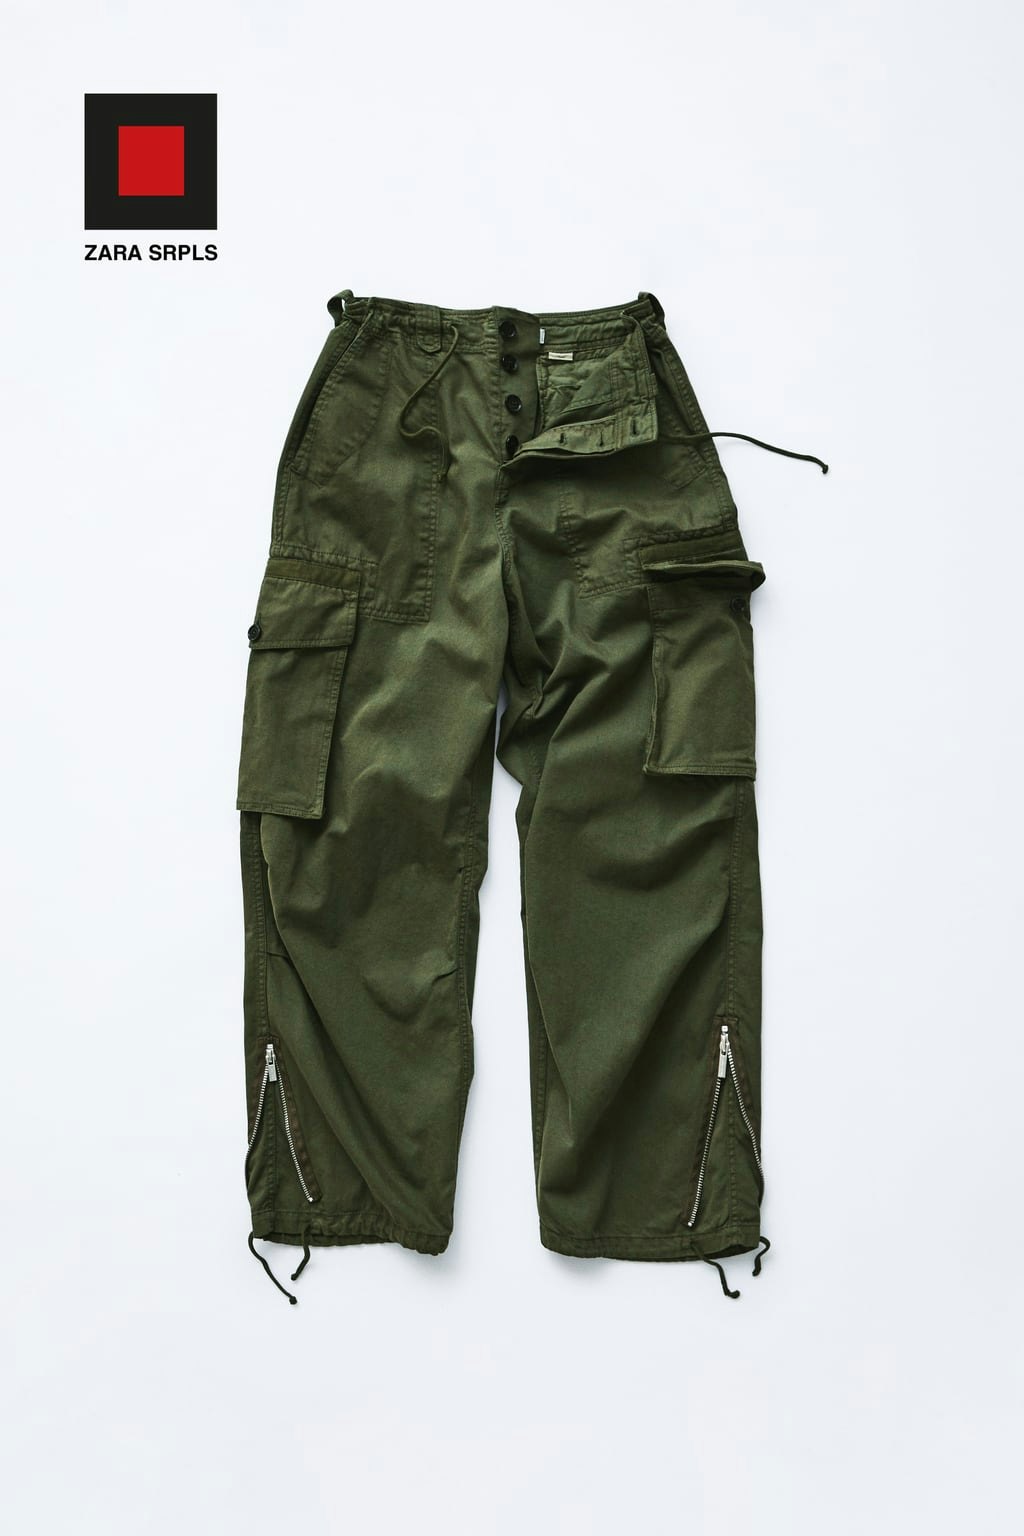 zara green cargo pants